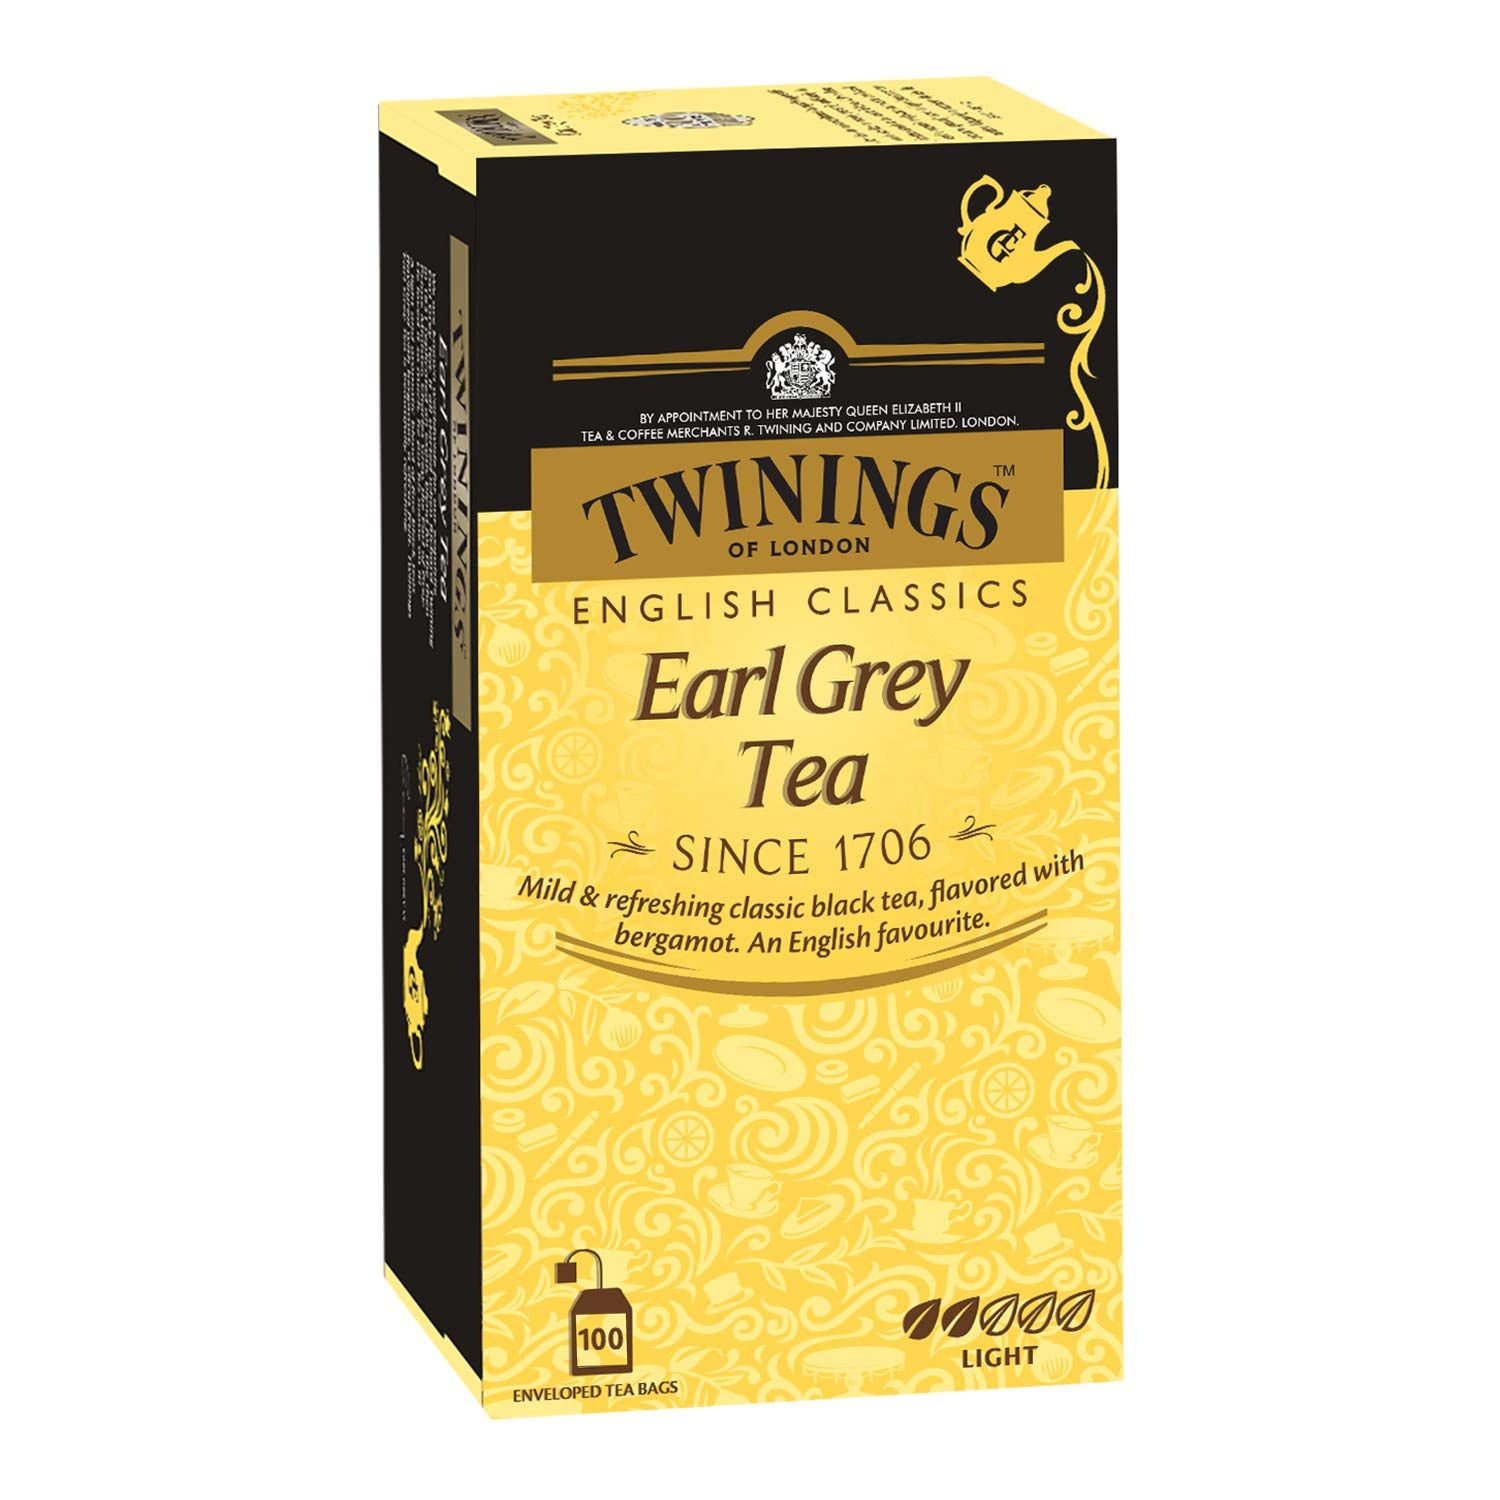 Twinings Early Grey Tea Image